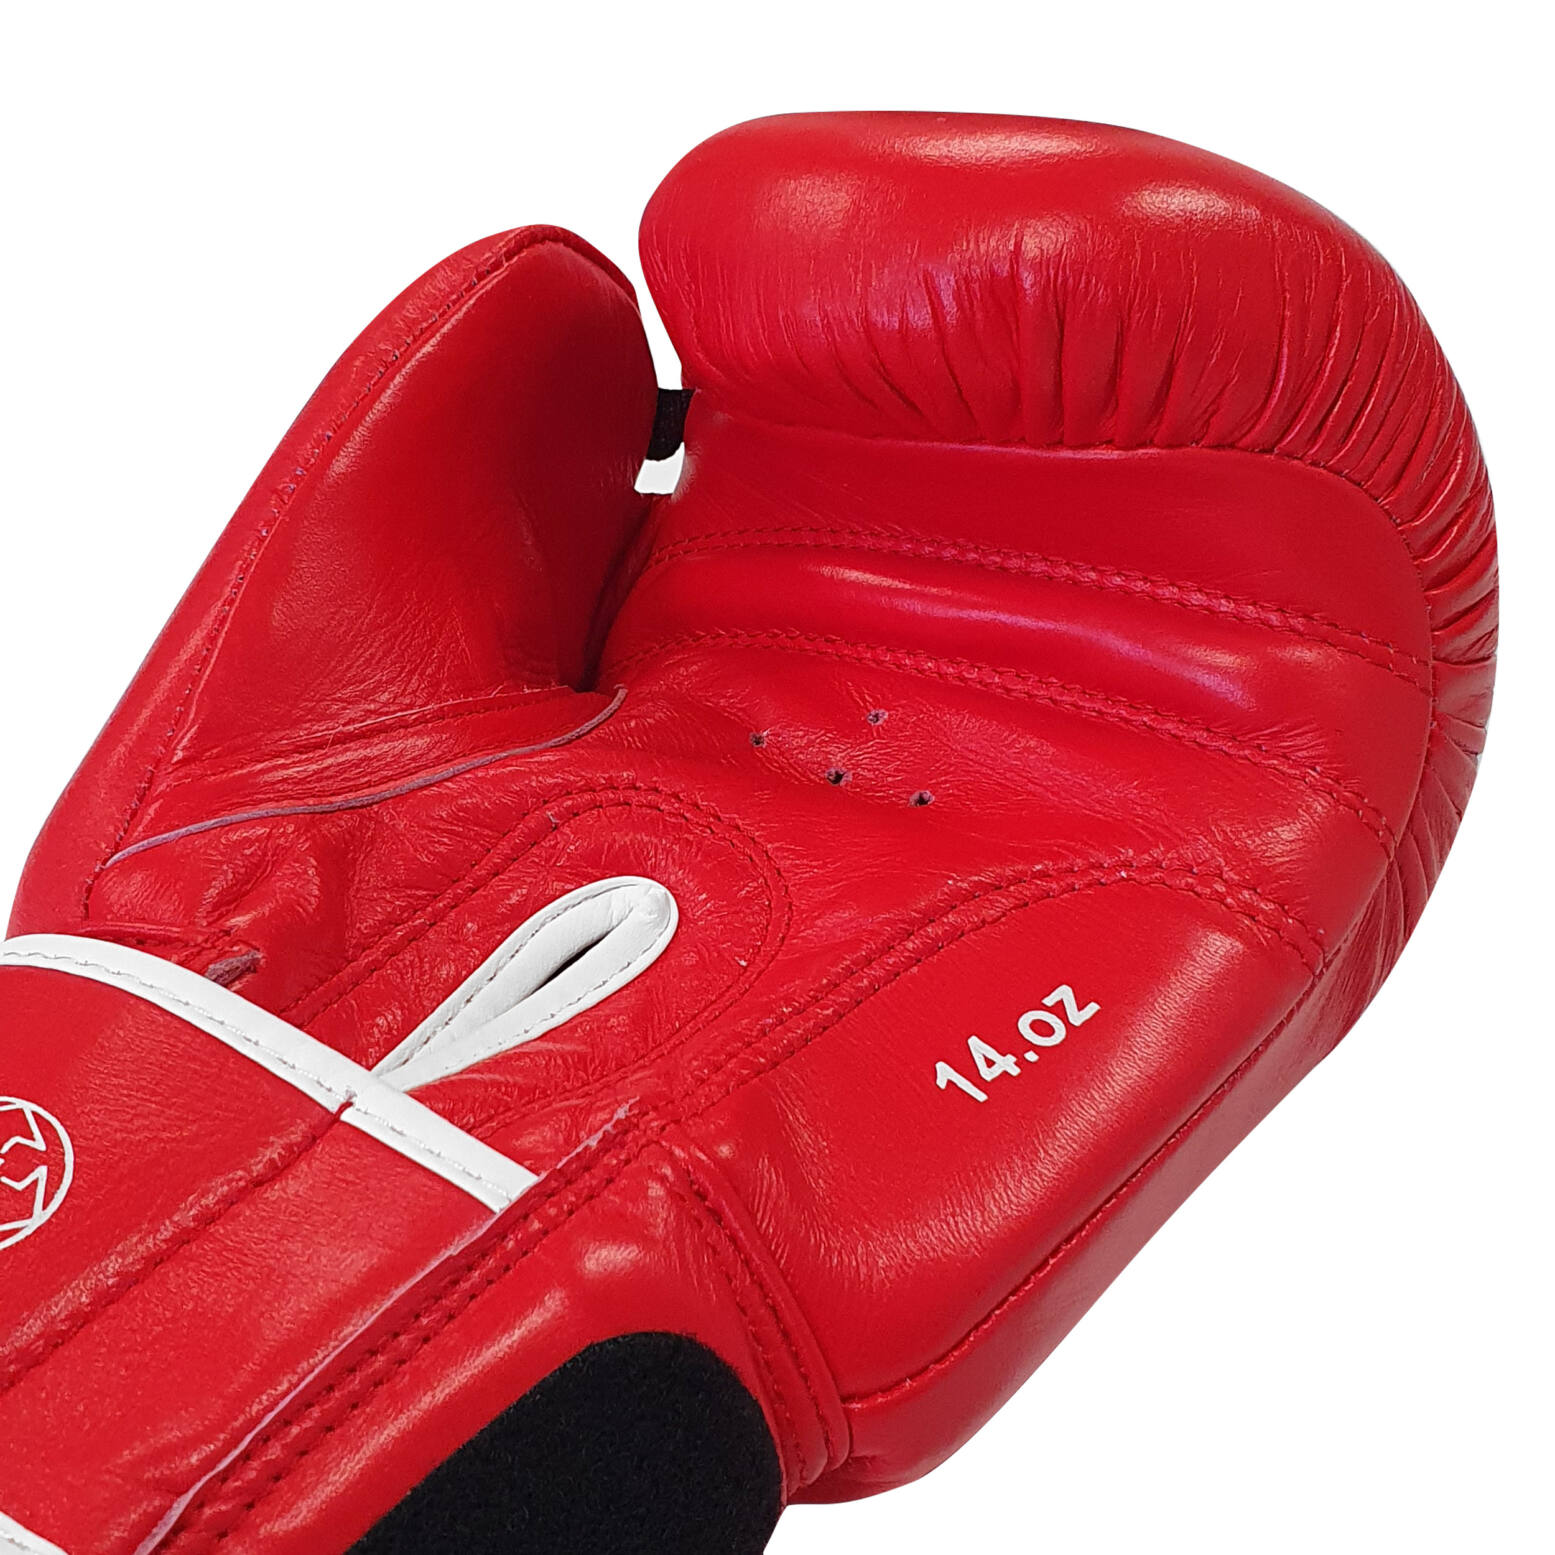 _0002s_0006_Stiel Pro Boxing Handschoenen Rood_7